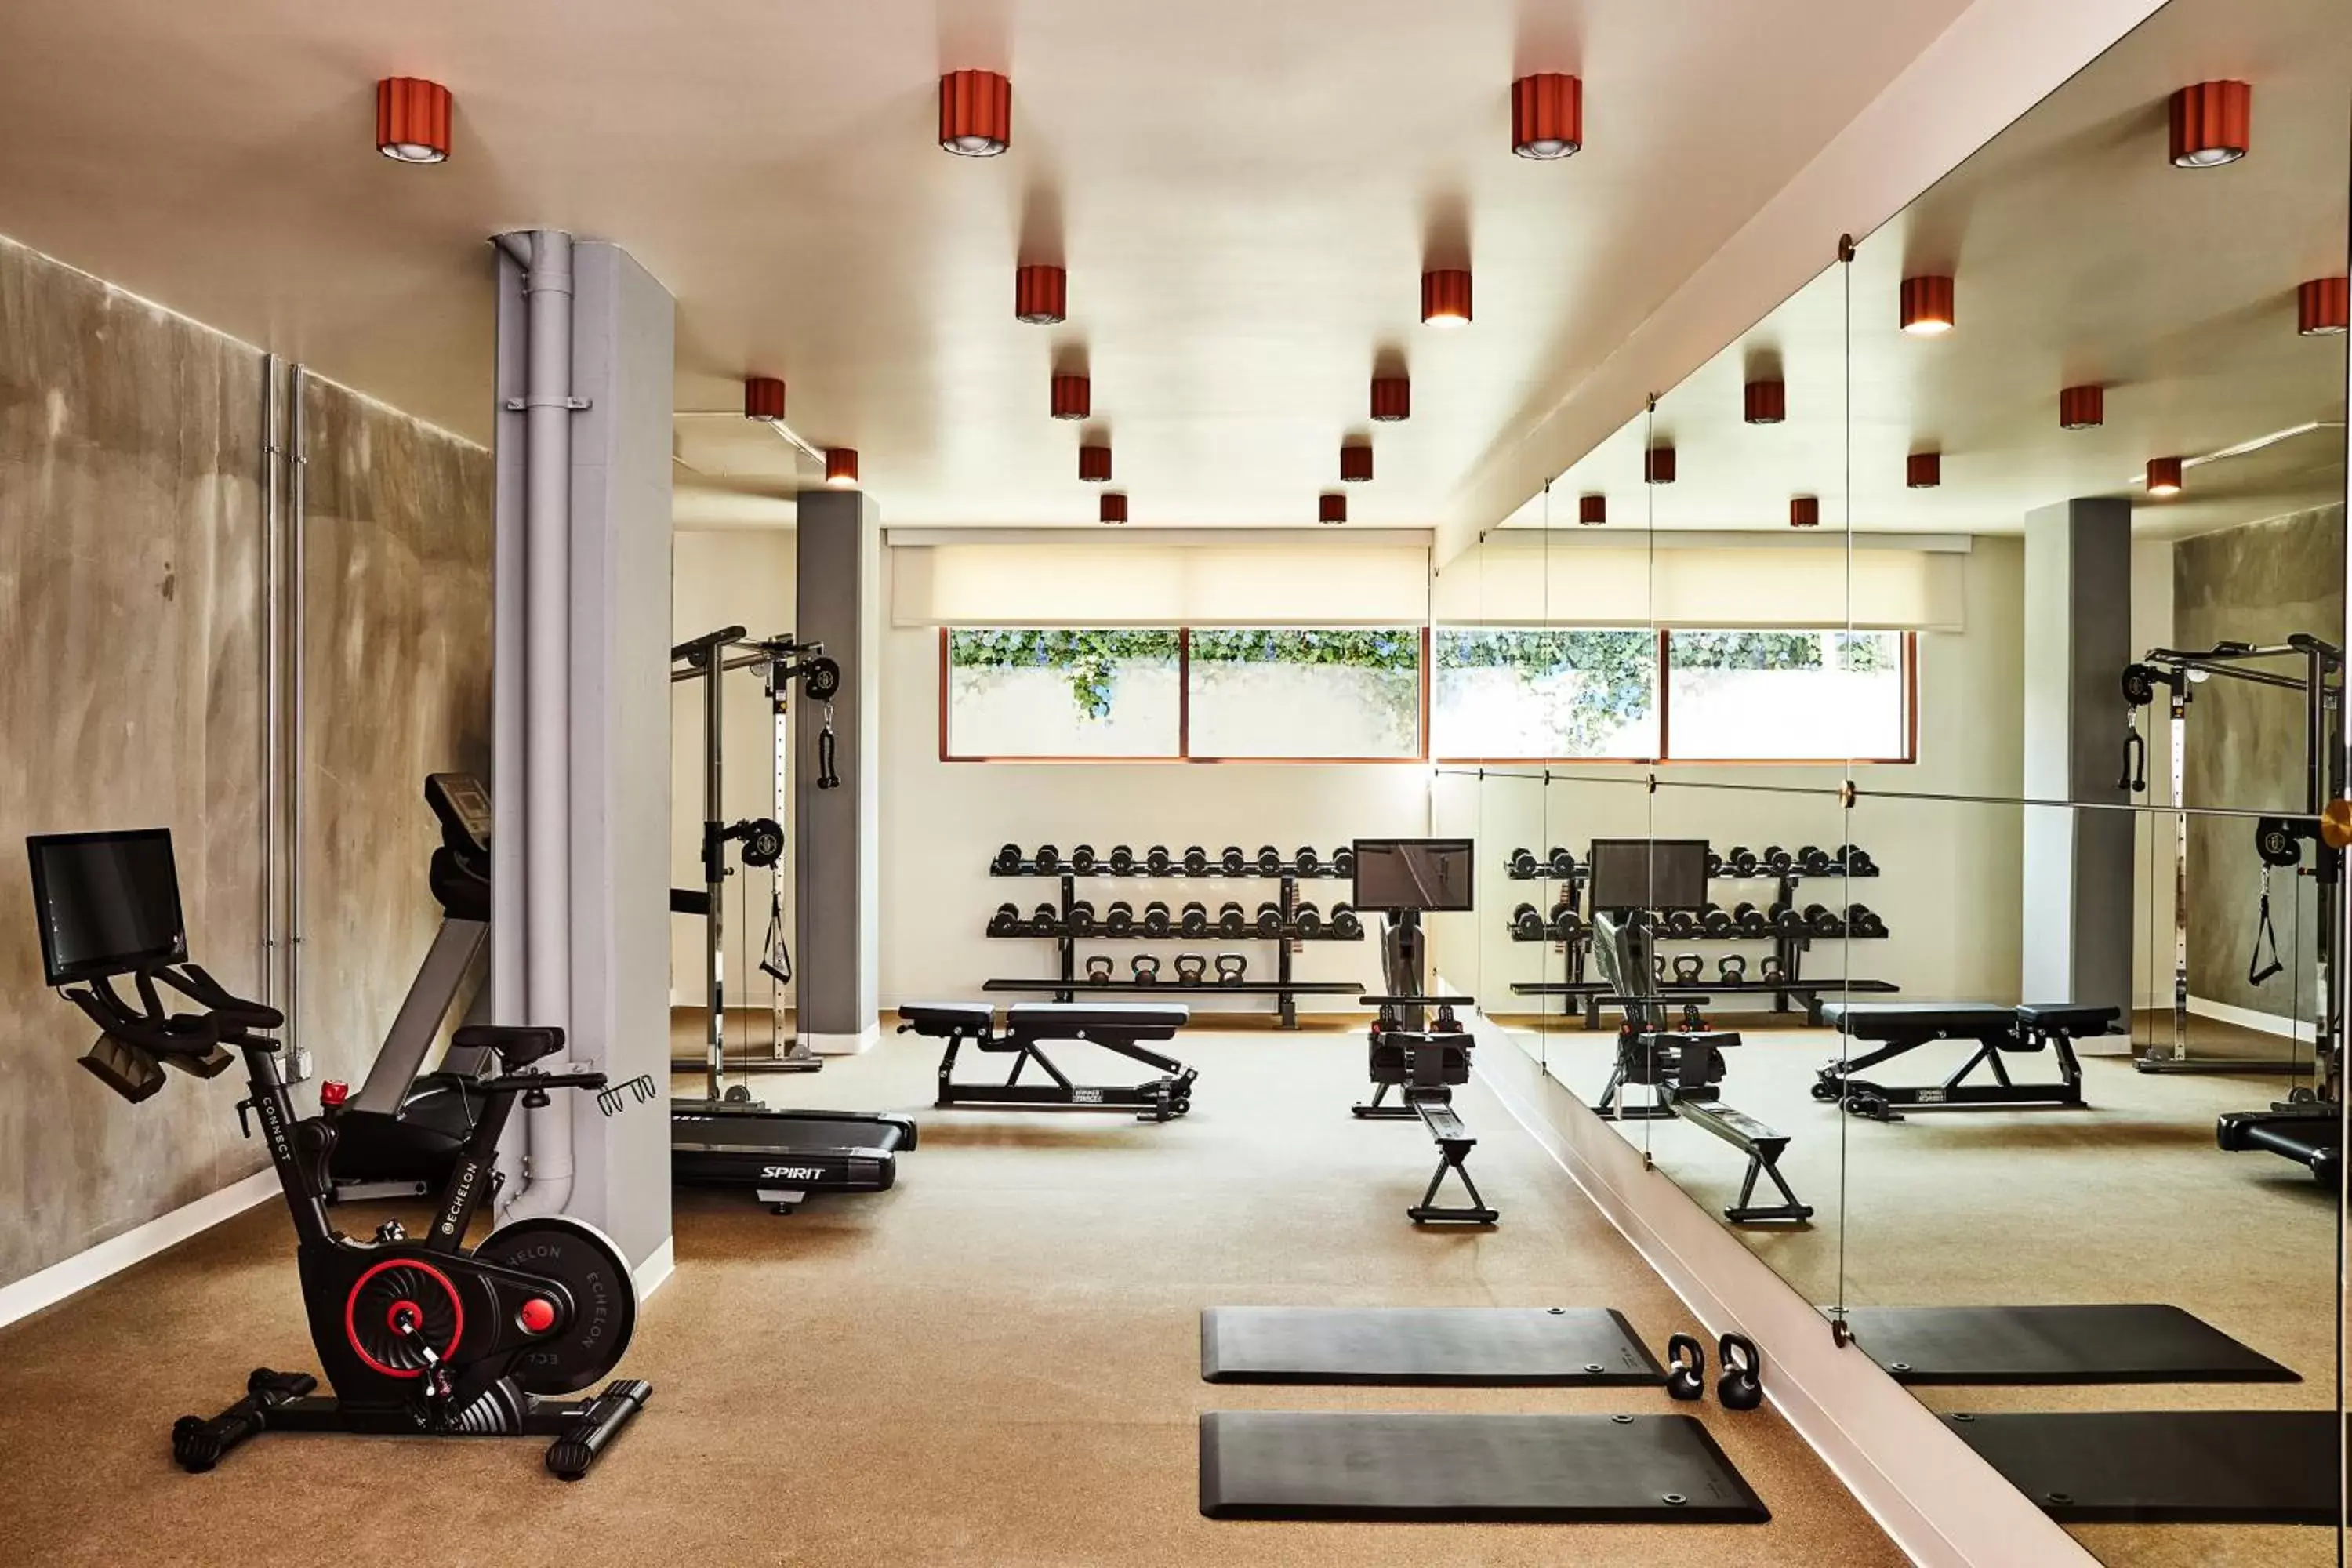 Fitness centre/facilities, Fitness Center/Facilities in Alsace LA